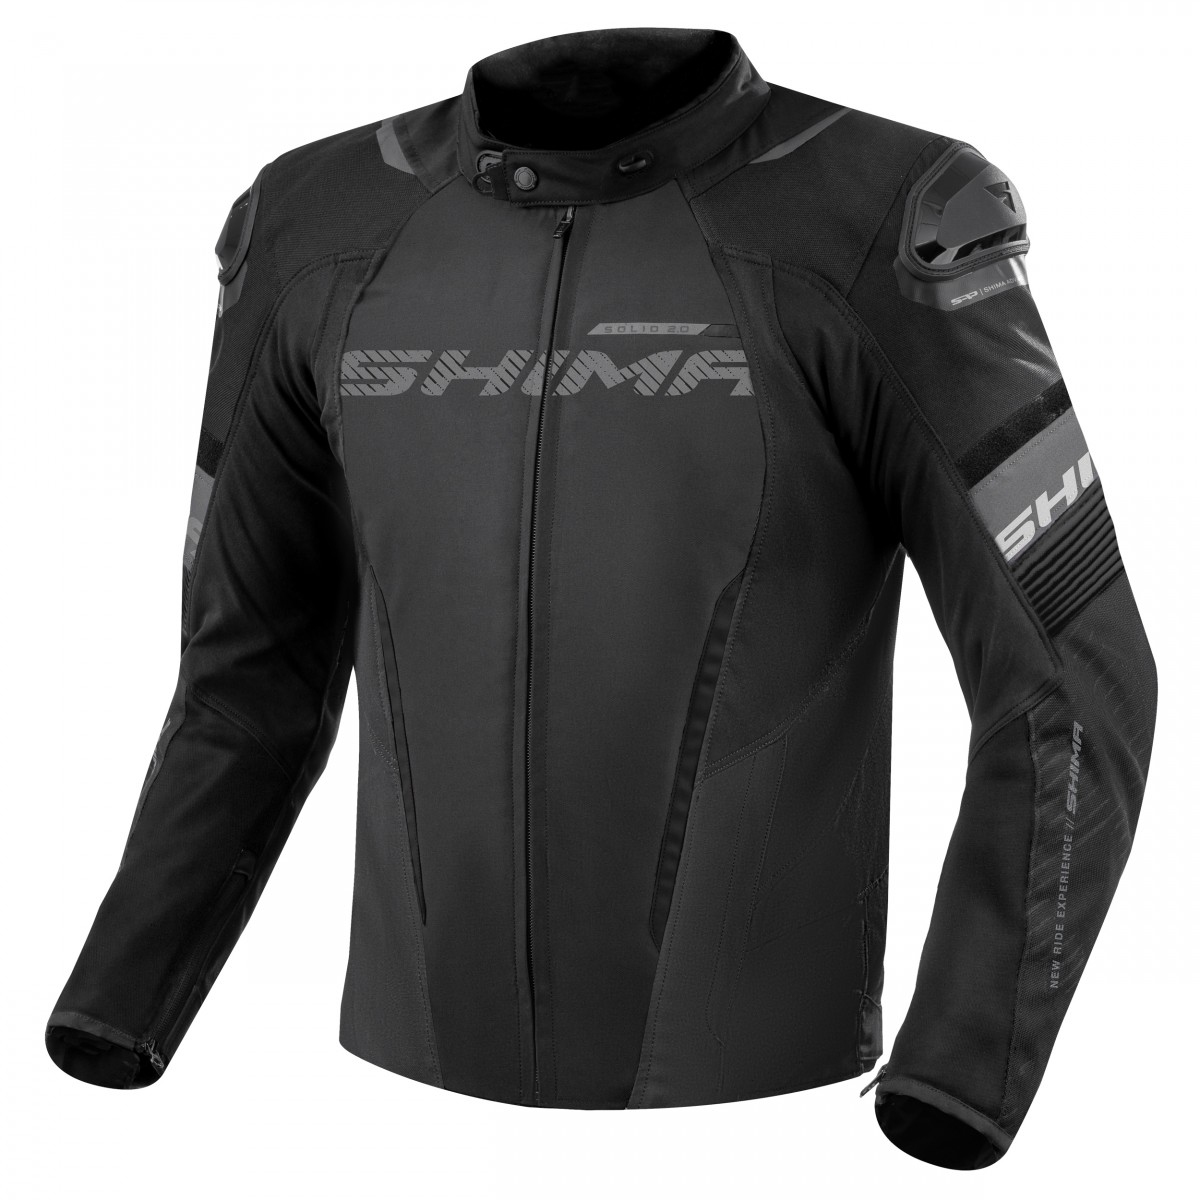 SHIMA SOLID 2.0 BLACK pánska športovo turistická bunda, 3XL